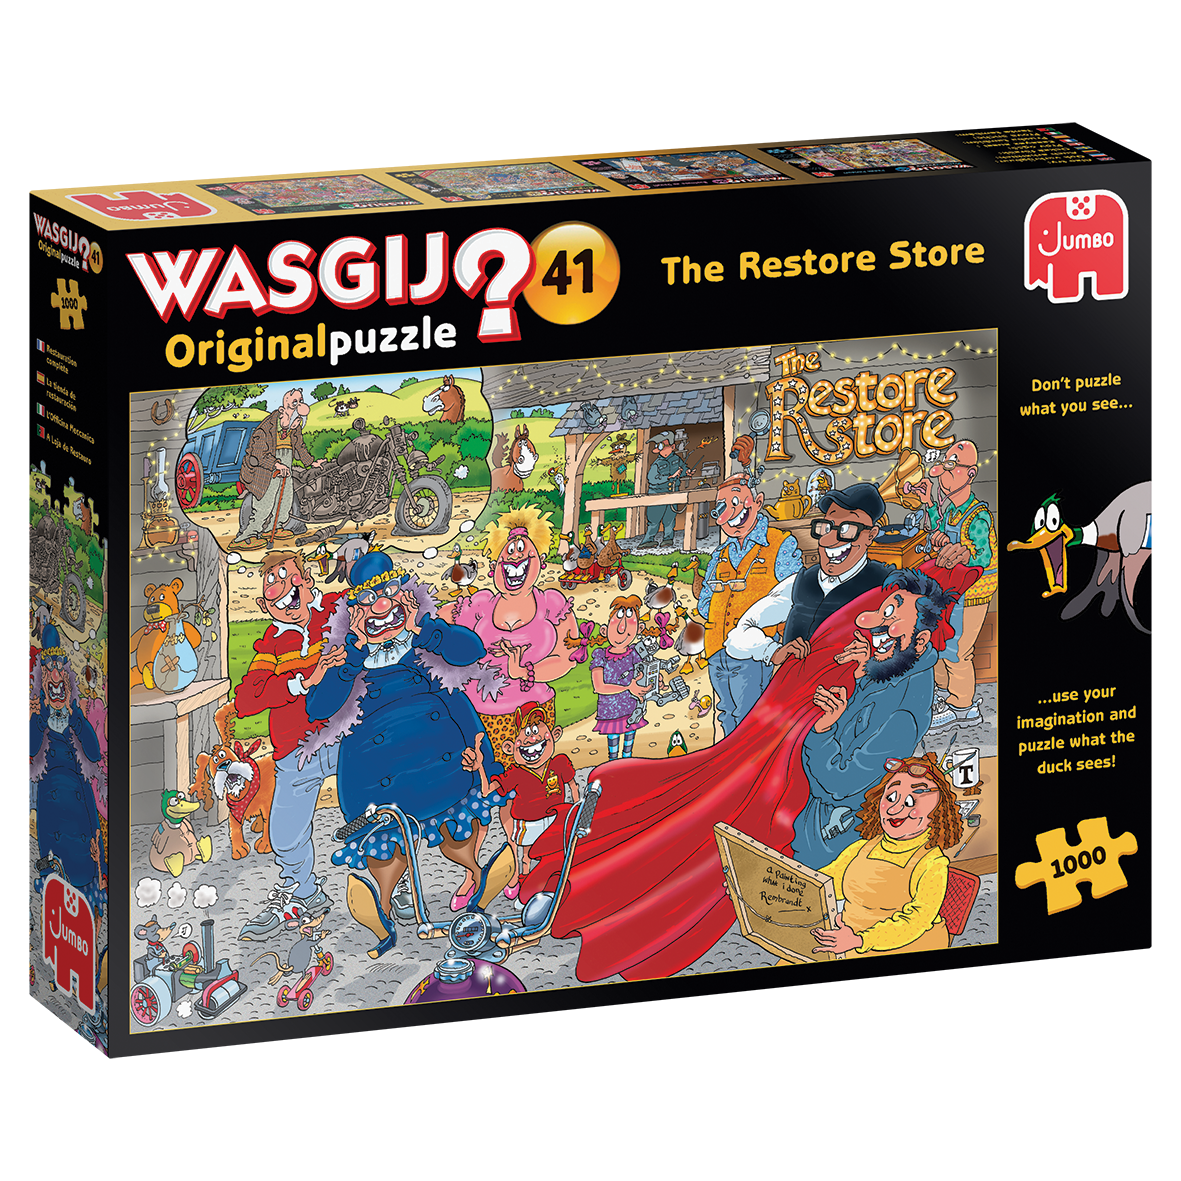 Wasgij Original 41 - The Restore Store 1000pcs